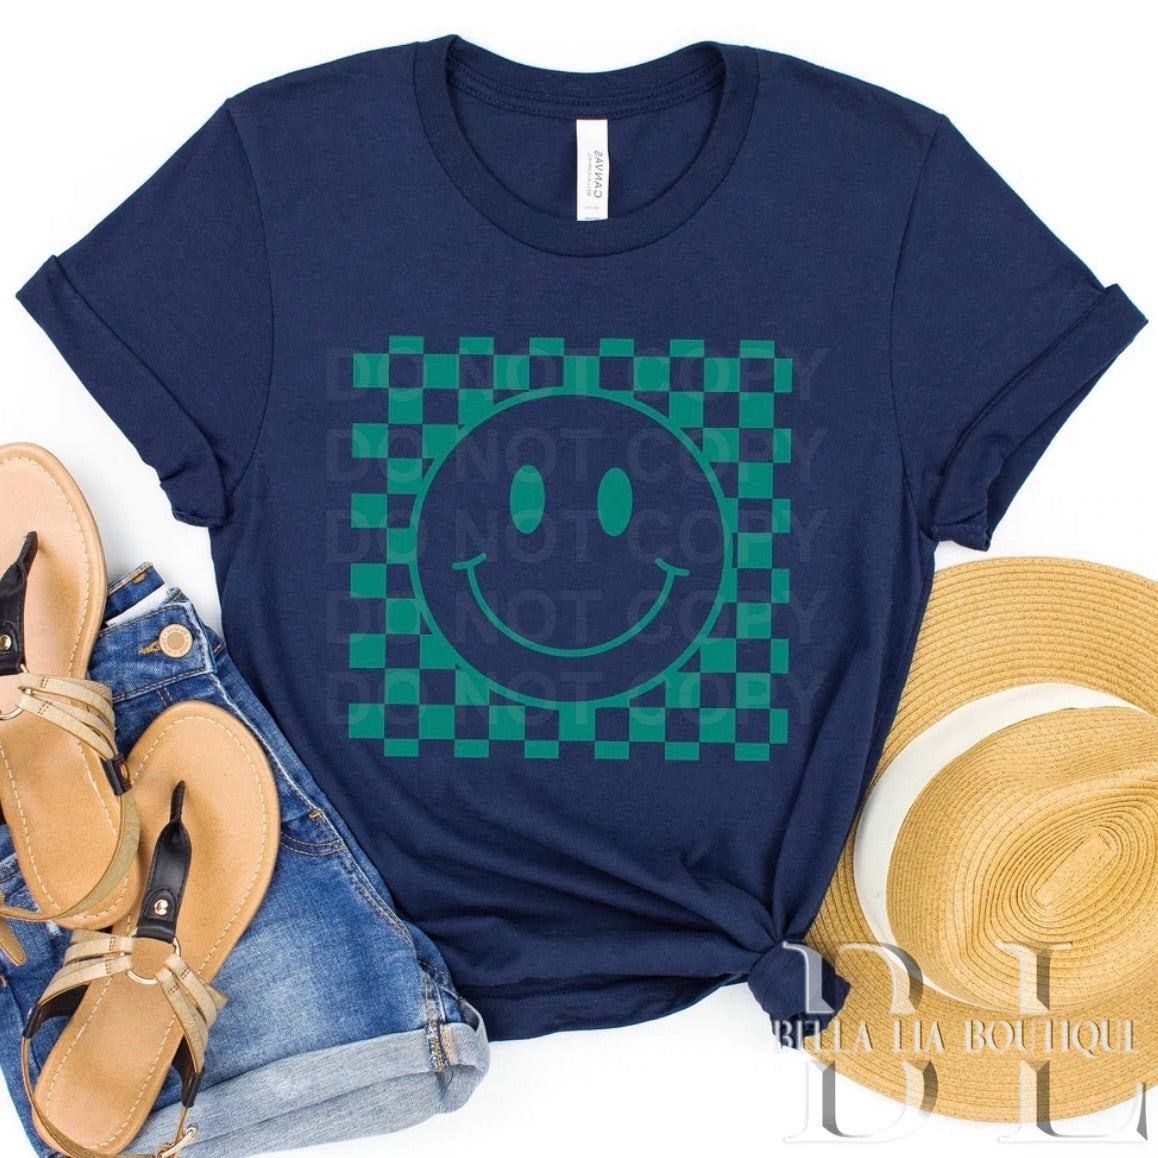 Checkered Smiley Graphic Tee or Sweatshirt - Bella Lia Boutique